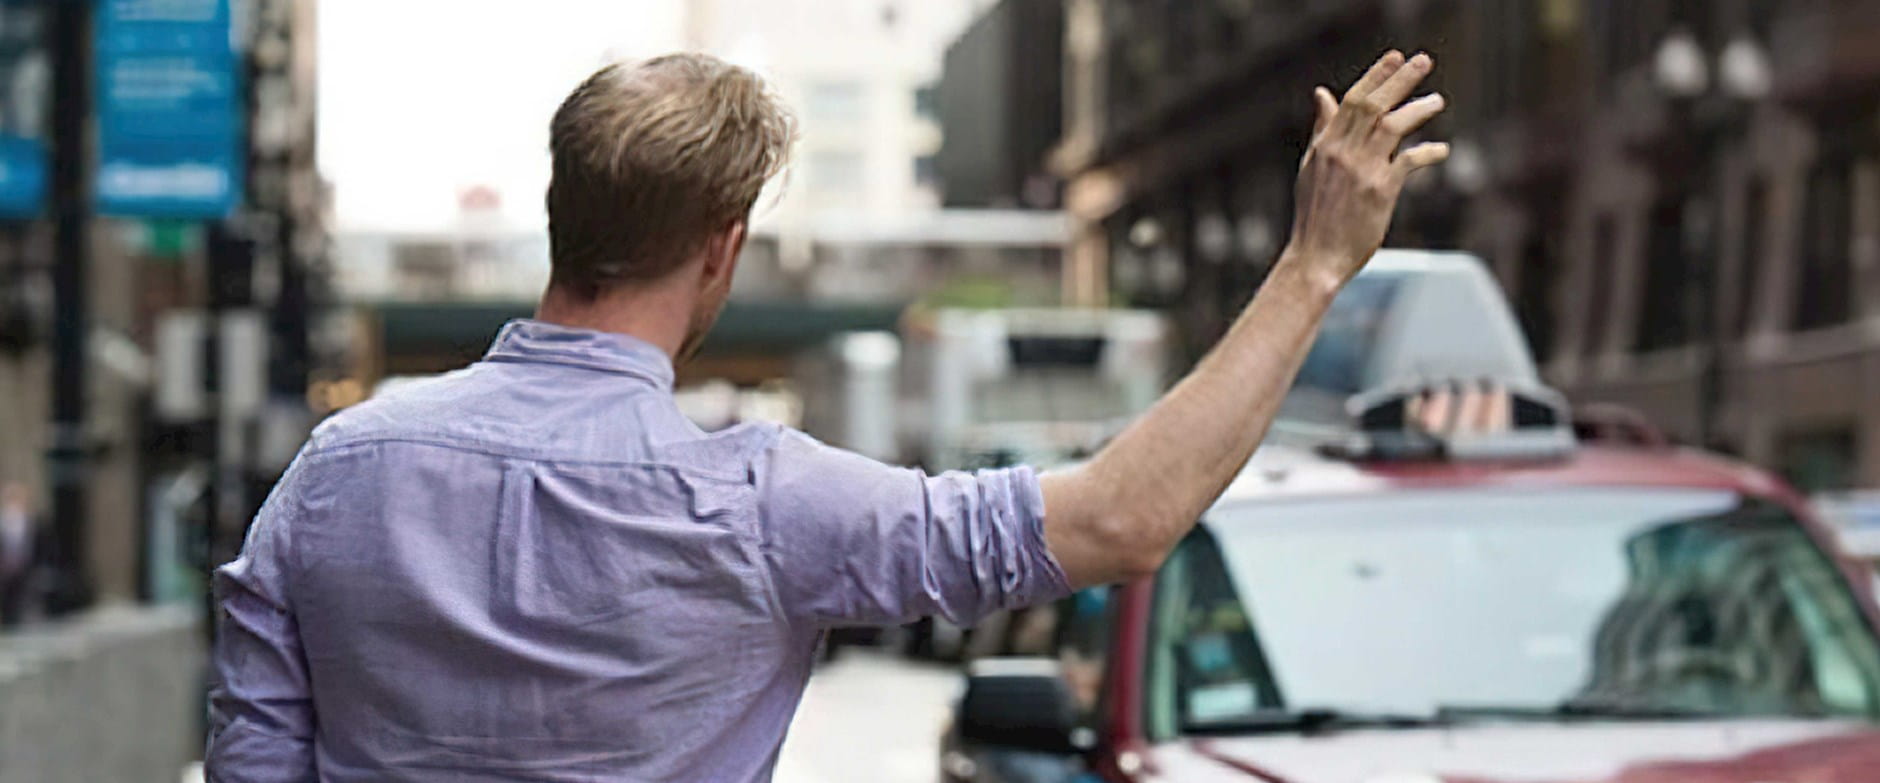 Man waving down cab